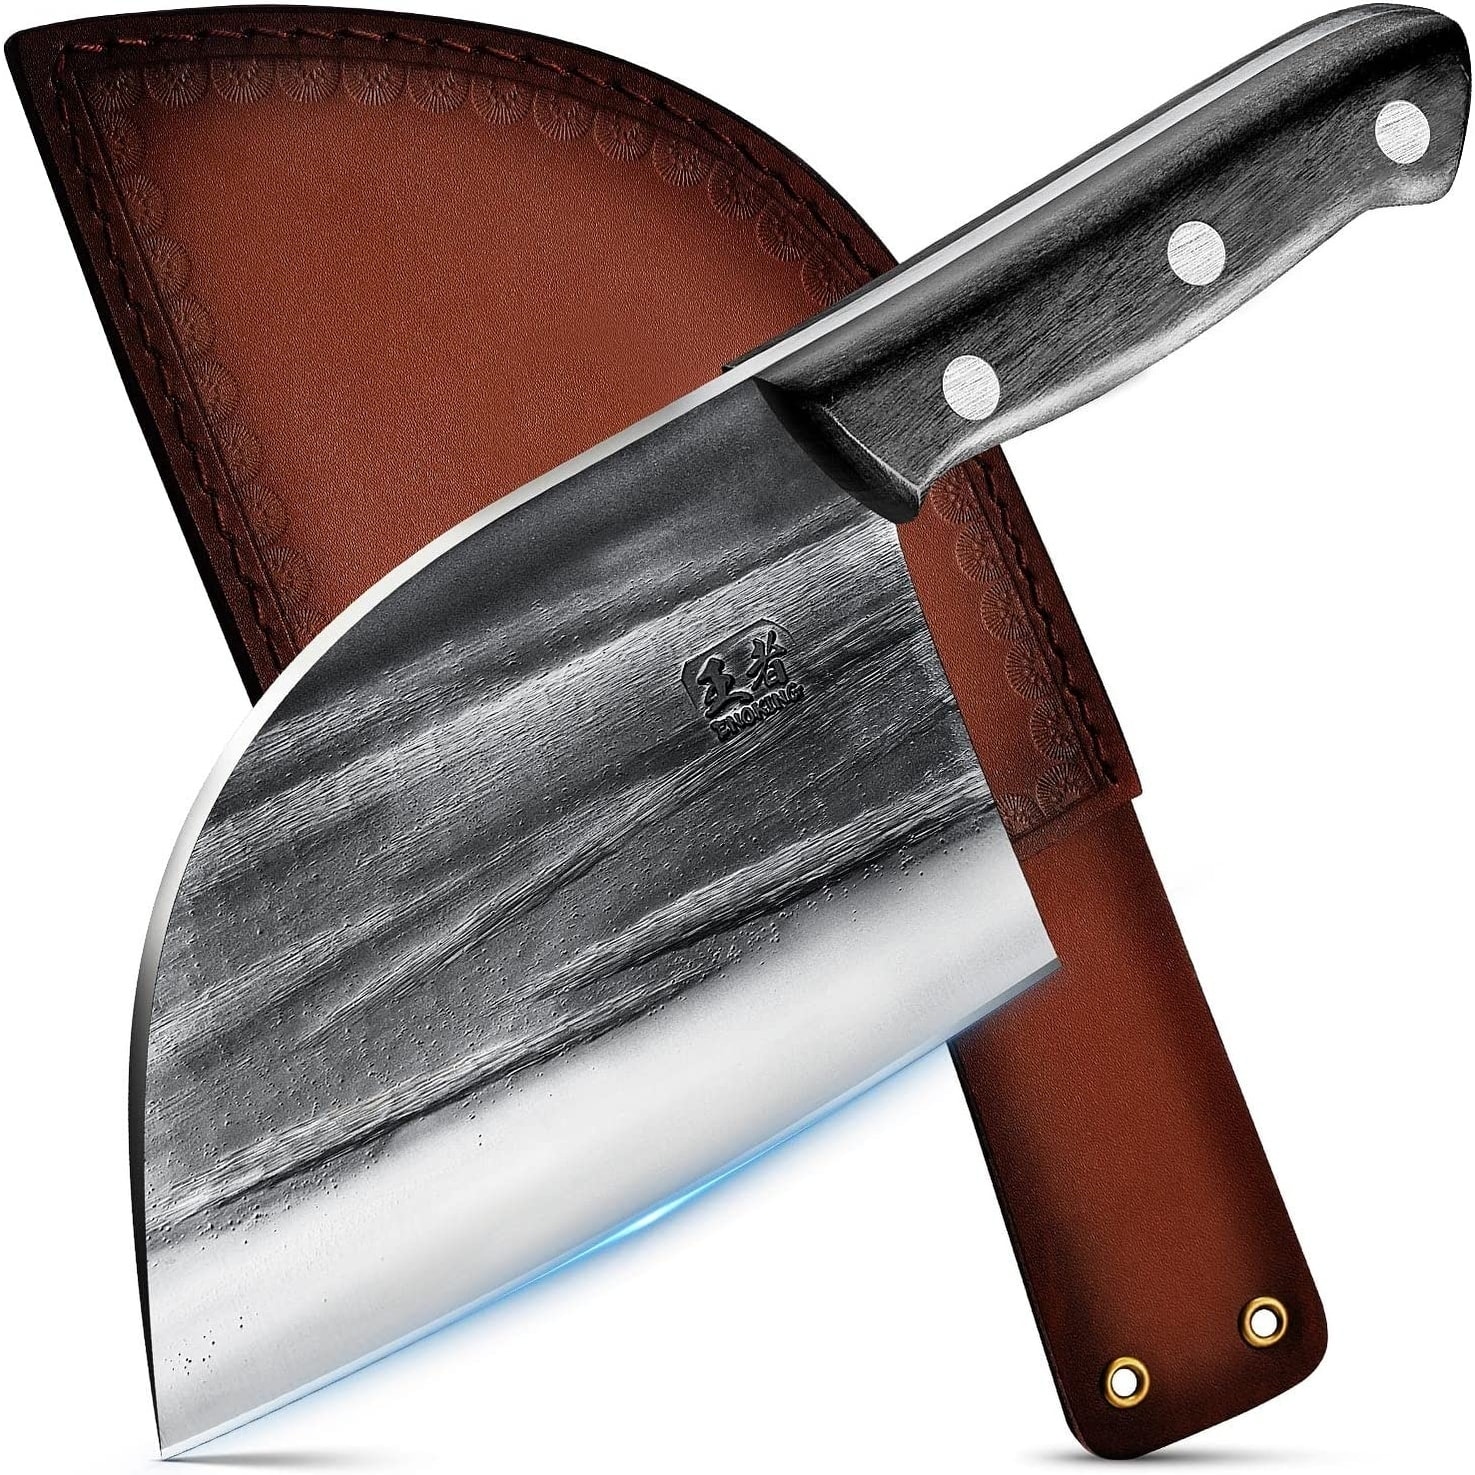 ENOKING Hand Forged Knife, 7 Inch Chef Knife, High Carbon Steel Meat Knife,  Super Sharp Blade, Ergonomic Wood Handle Kitchen Knife